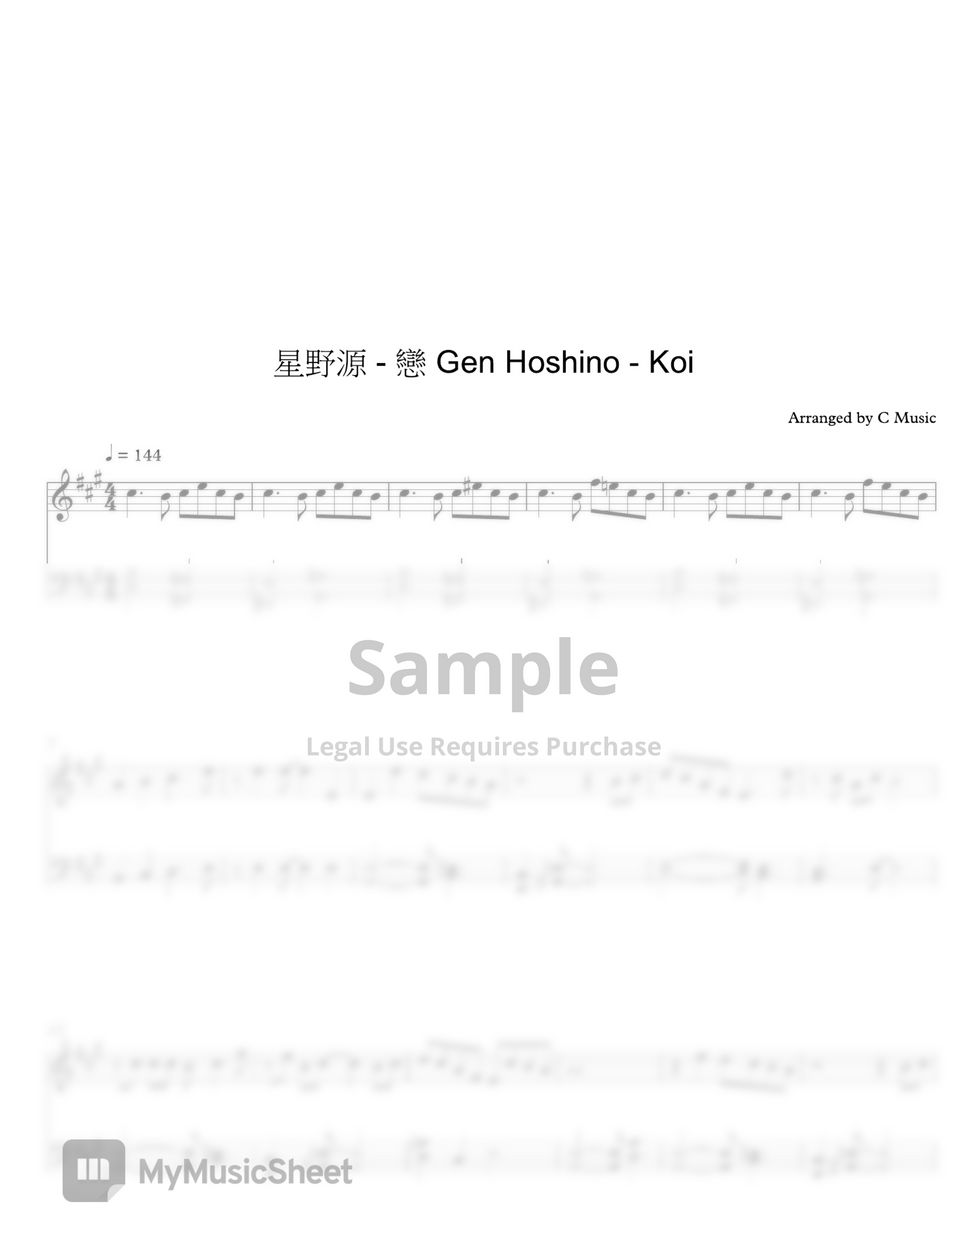 星野源 Hoshino Gen - 戀 Koi by C Music